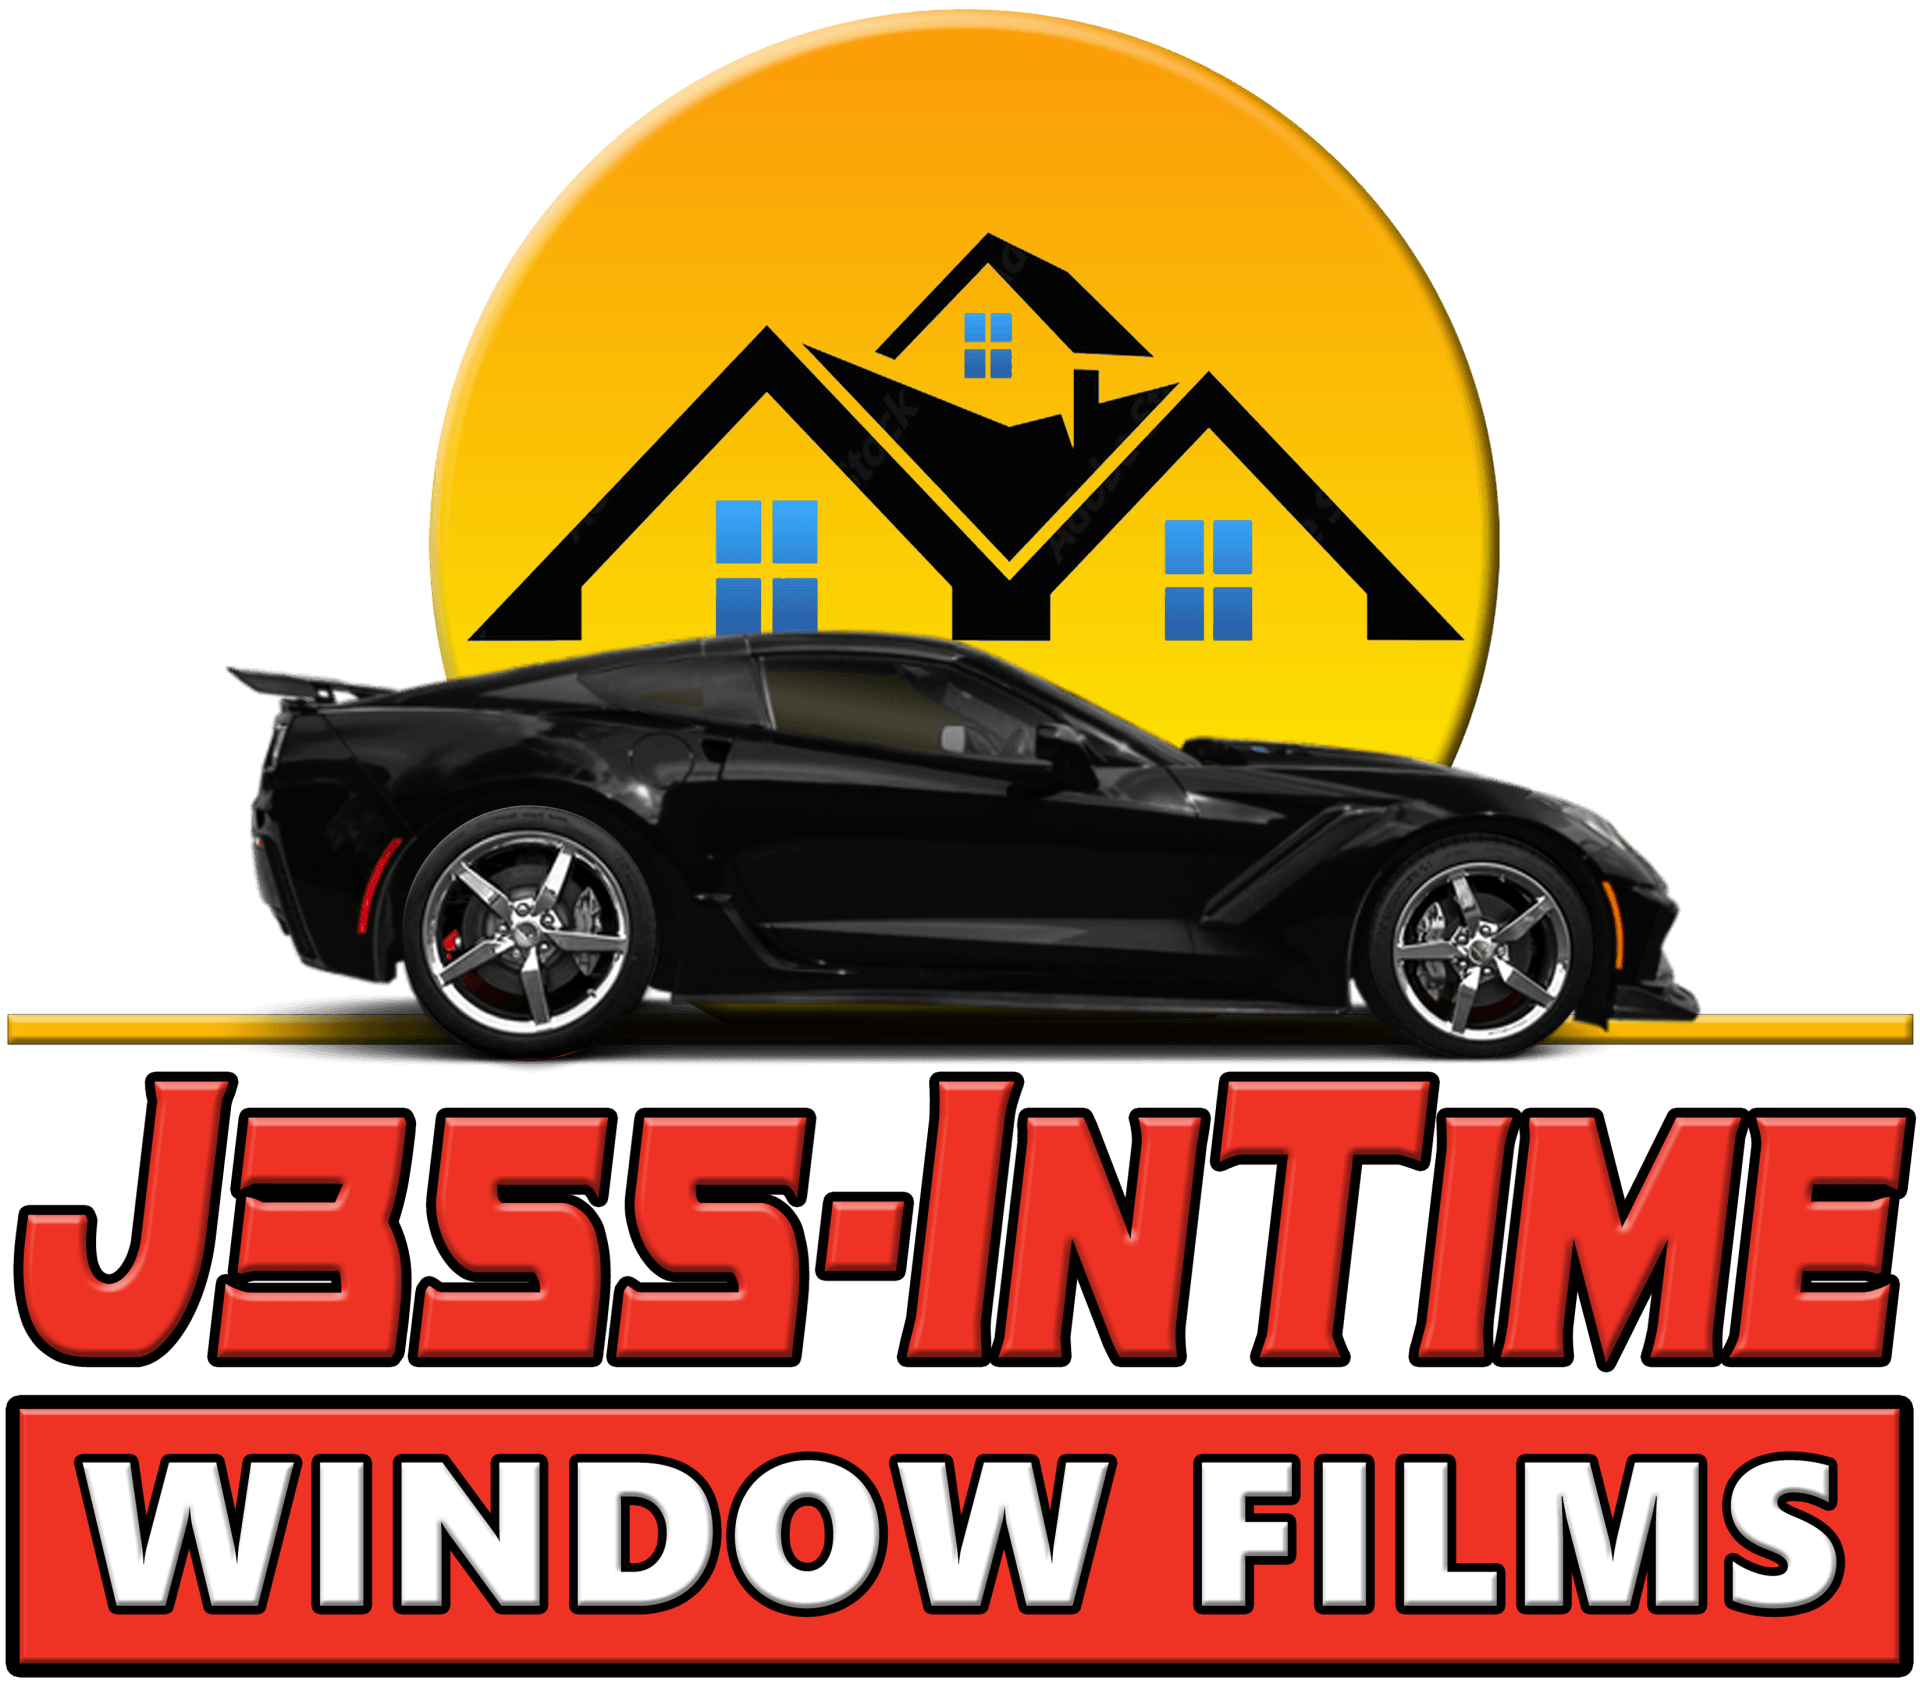 J3ss-InTime Window Films